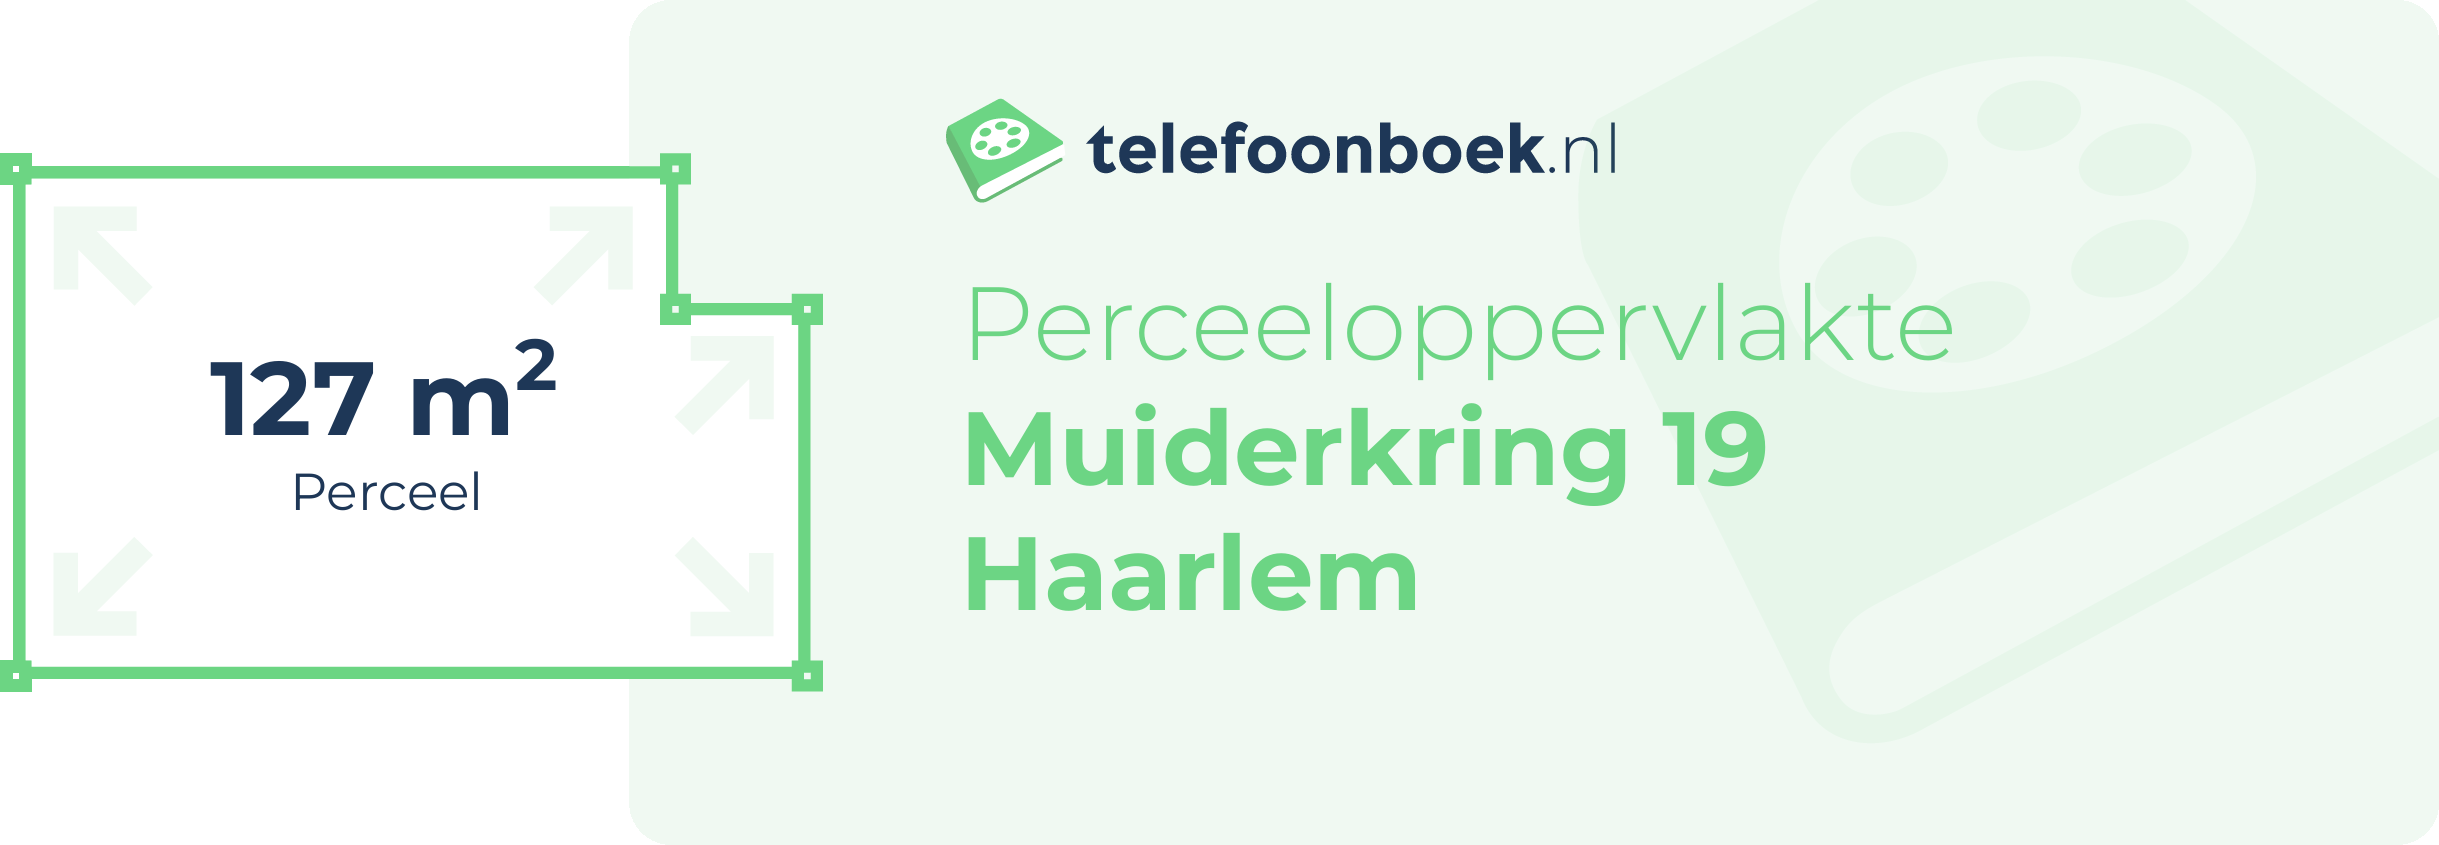 Perceeloppervlakte Muiderkring 19 Haarlem